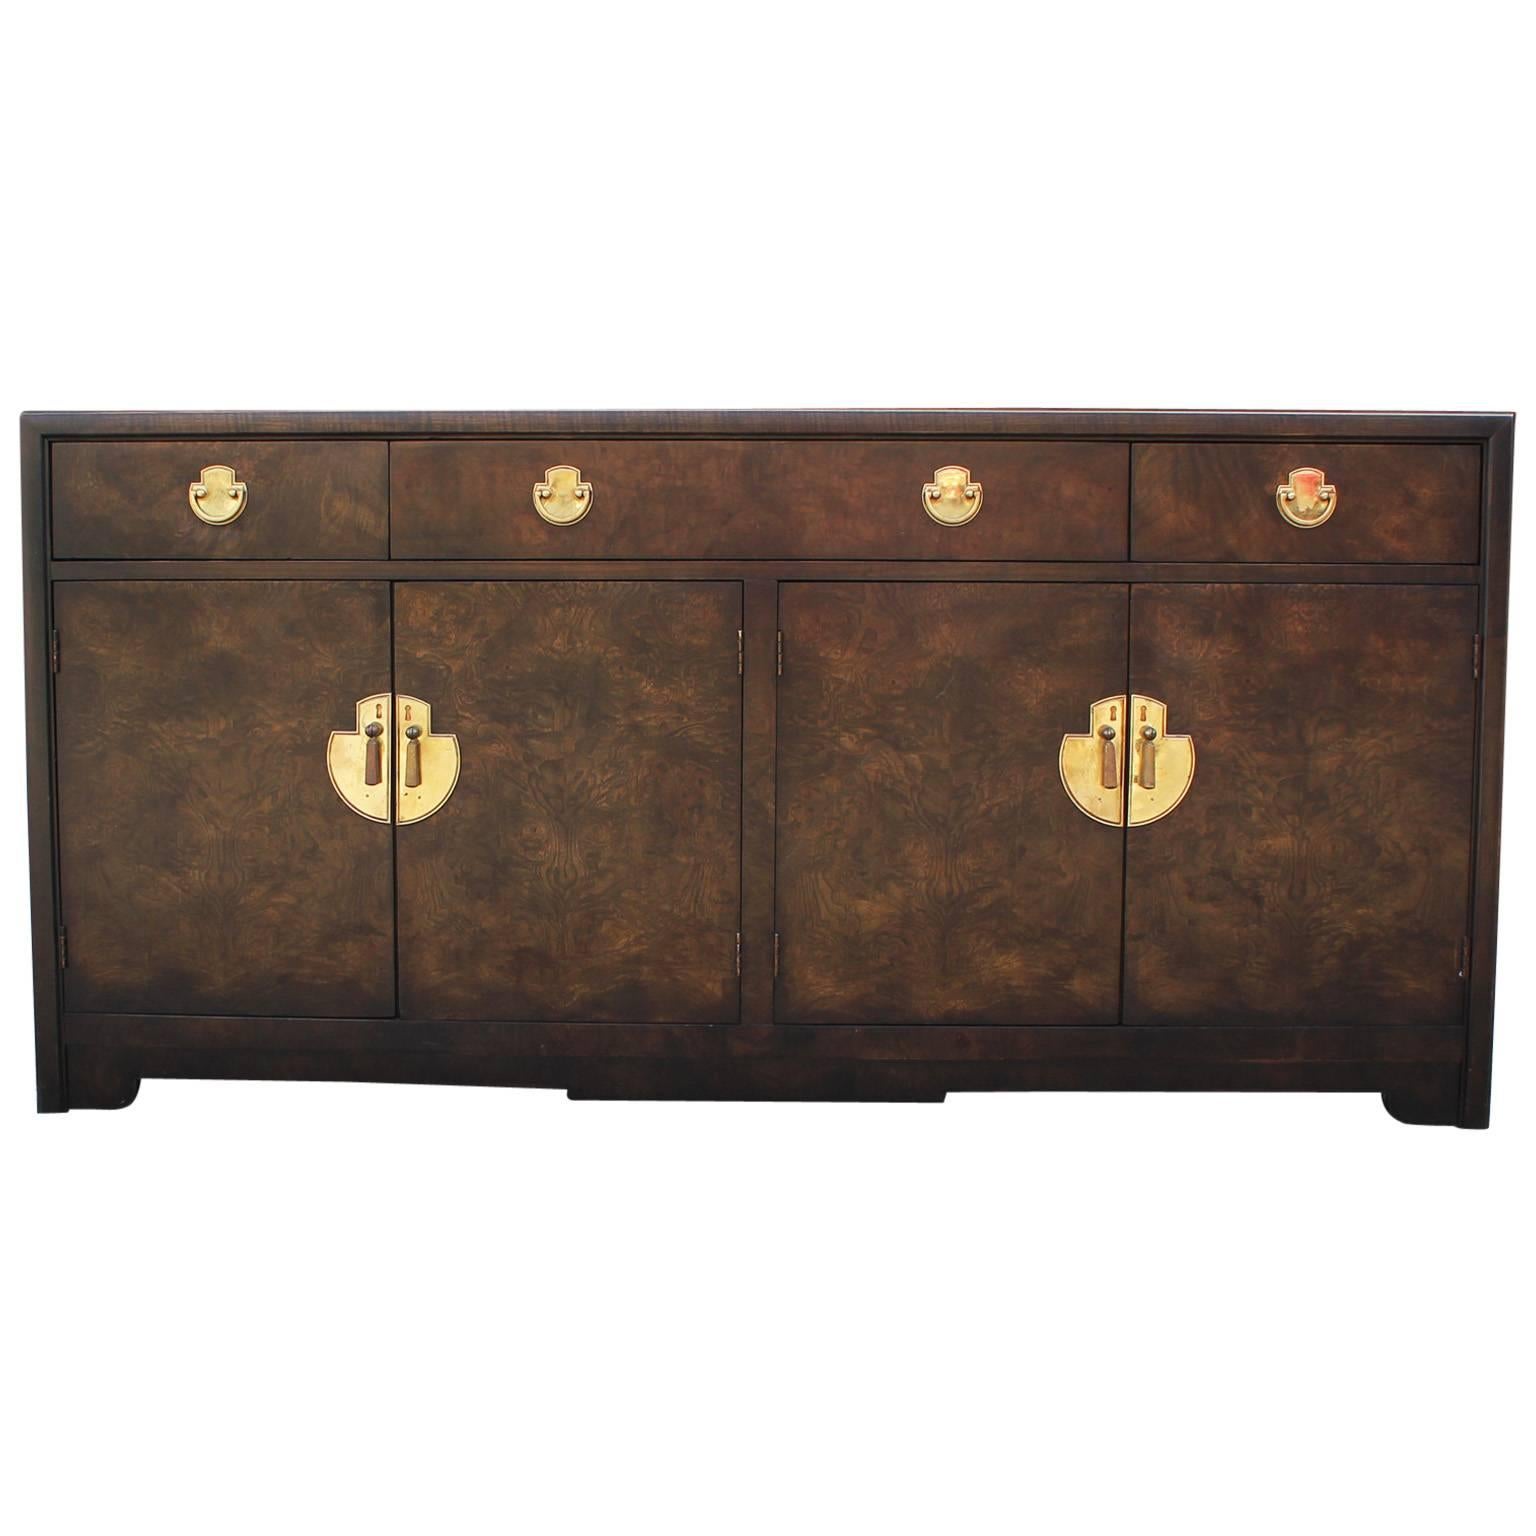 Glamorous Burl Wood Modern Dresser / Sideboard with Brass Hardware